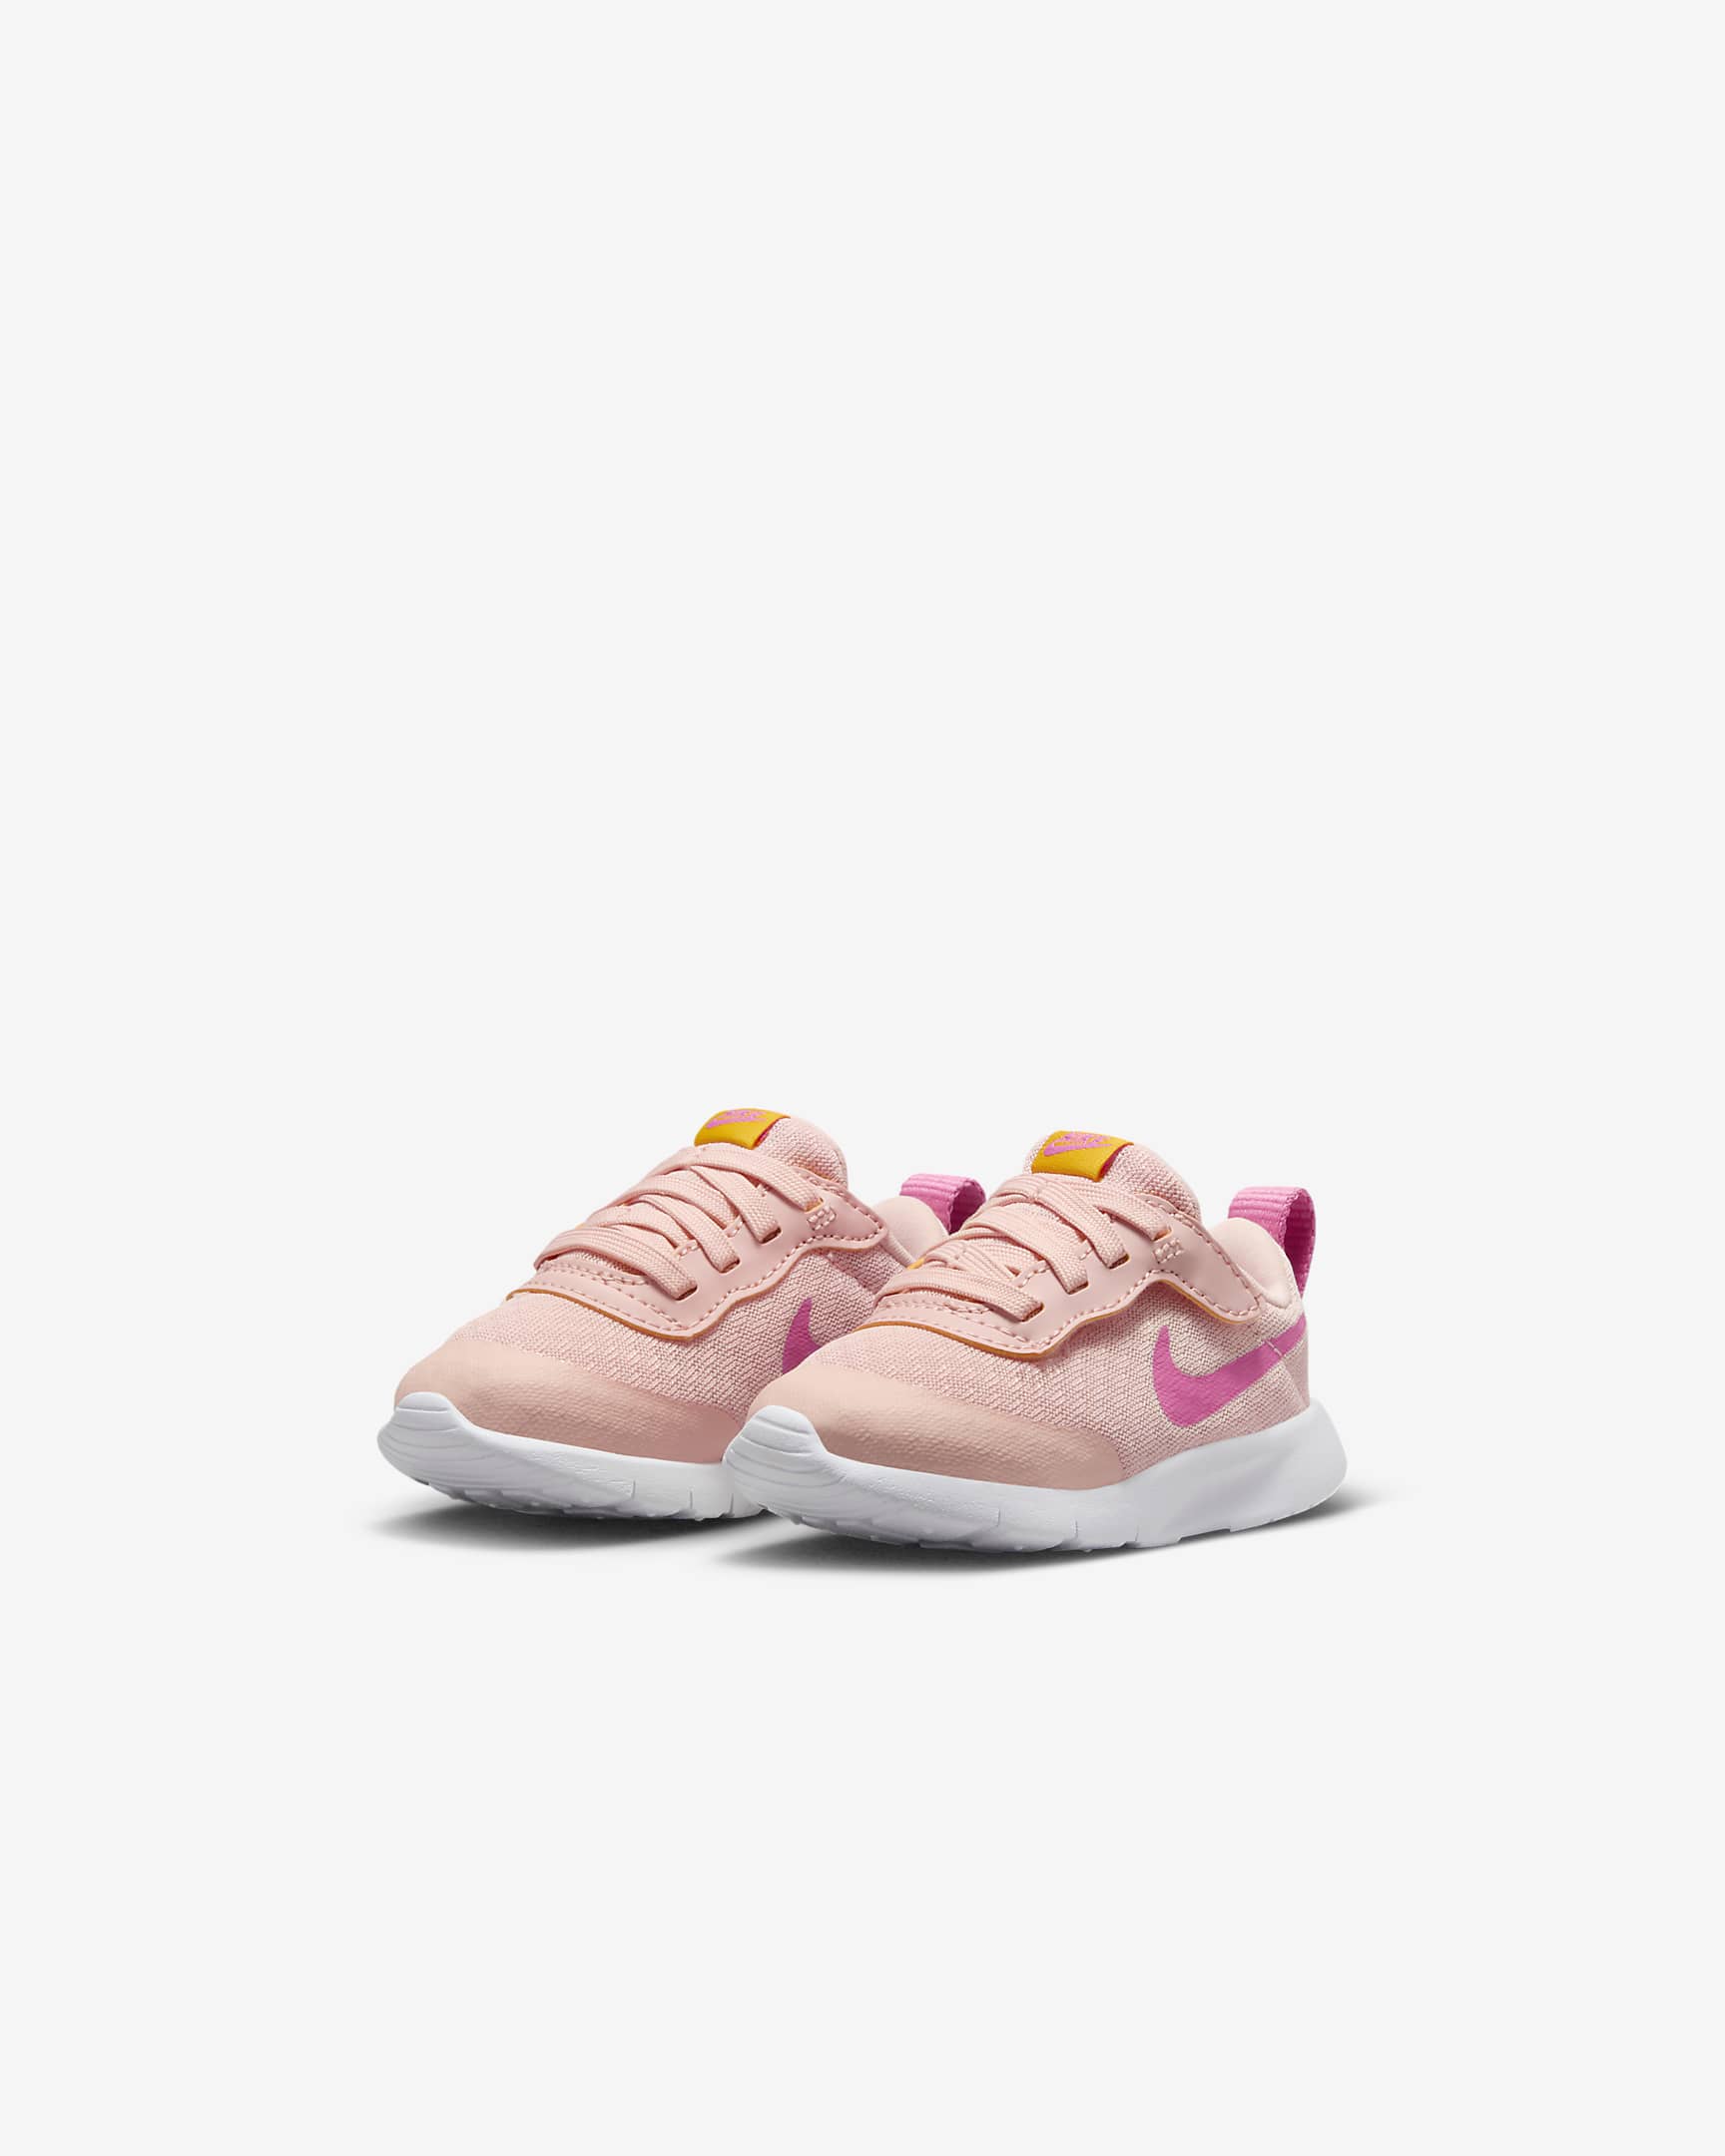 Tenis para bebé e infantil Nike Tanjun EasyOn - Naranja ártico/Oro universitario/Blanco/Rosa paleta